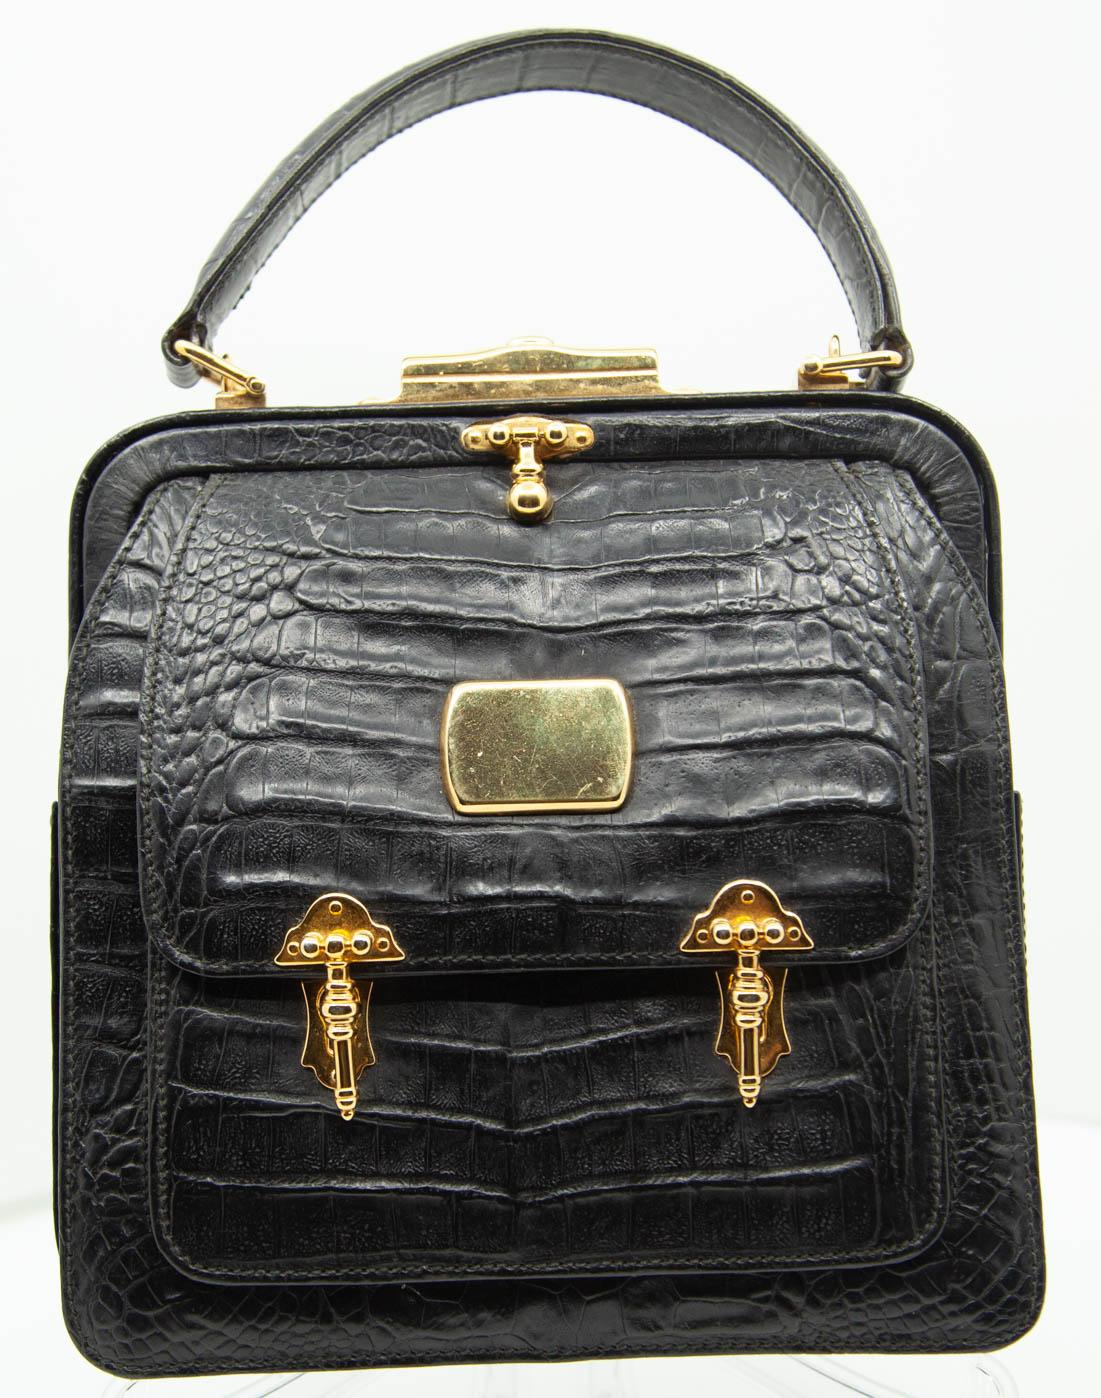 Vintage Valentino black vintage alligator handbag c1960s

7.5